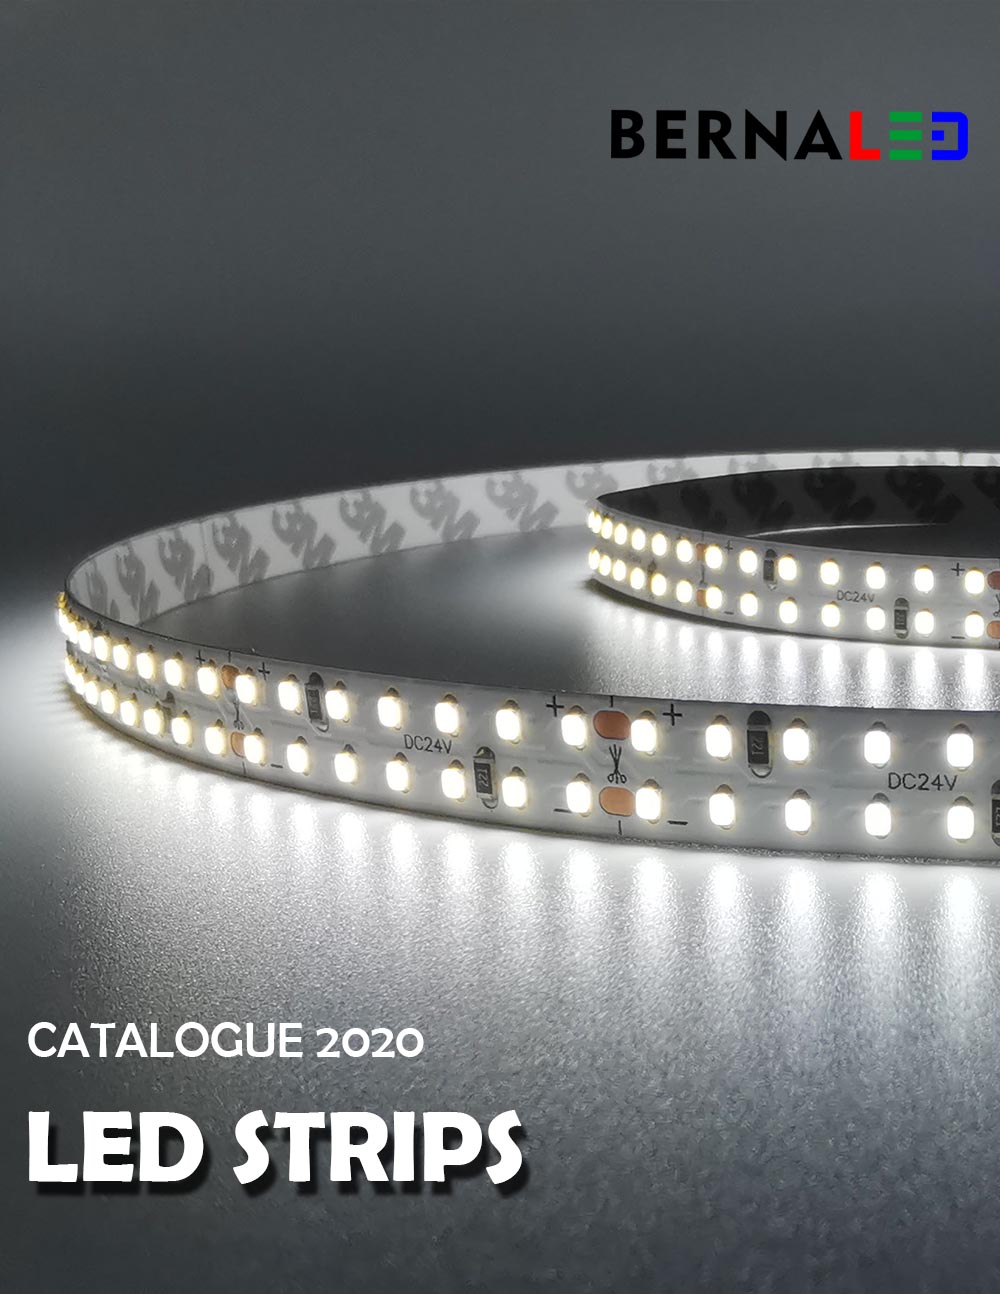 Catalogue 2020 LED Strip